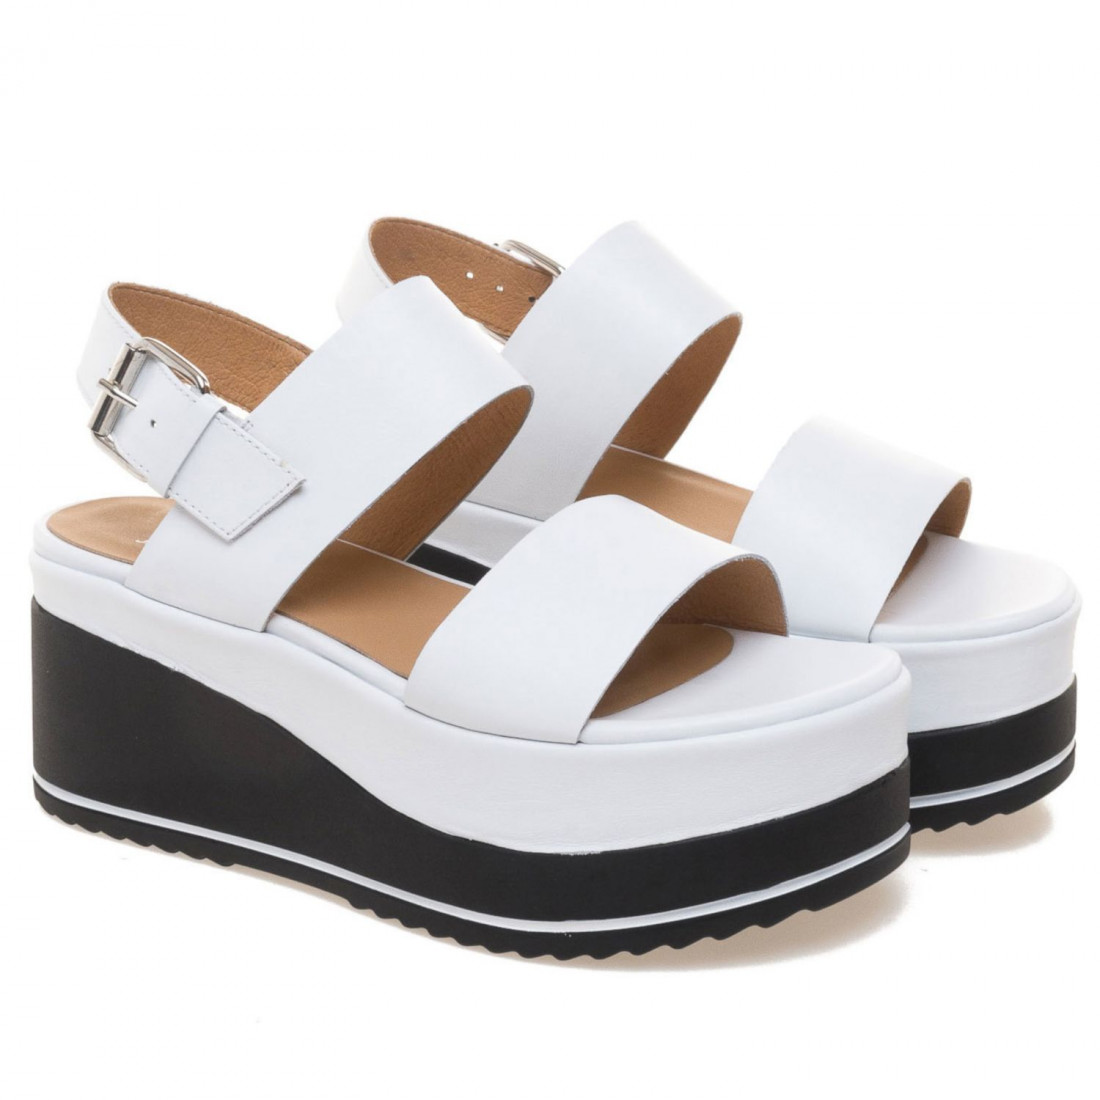 White leather Janet Sport Natasha wedge sandals